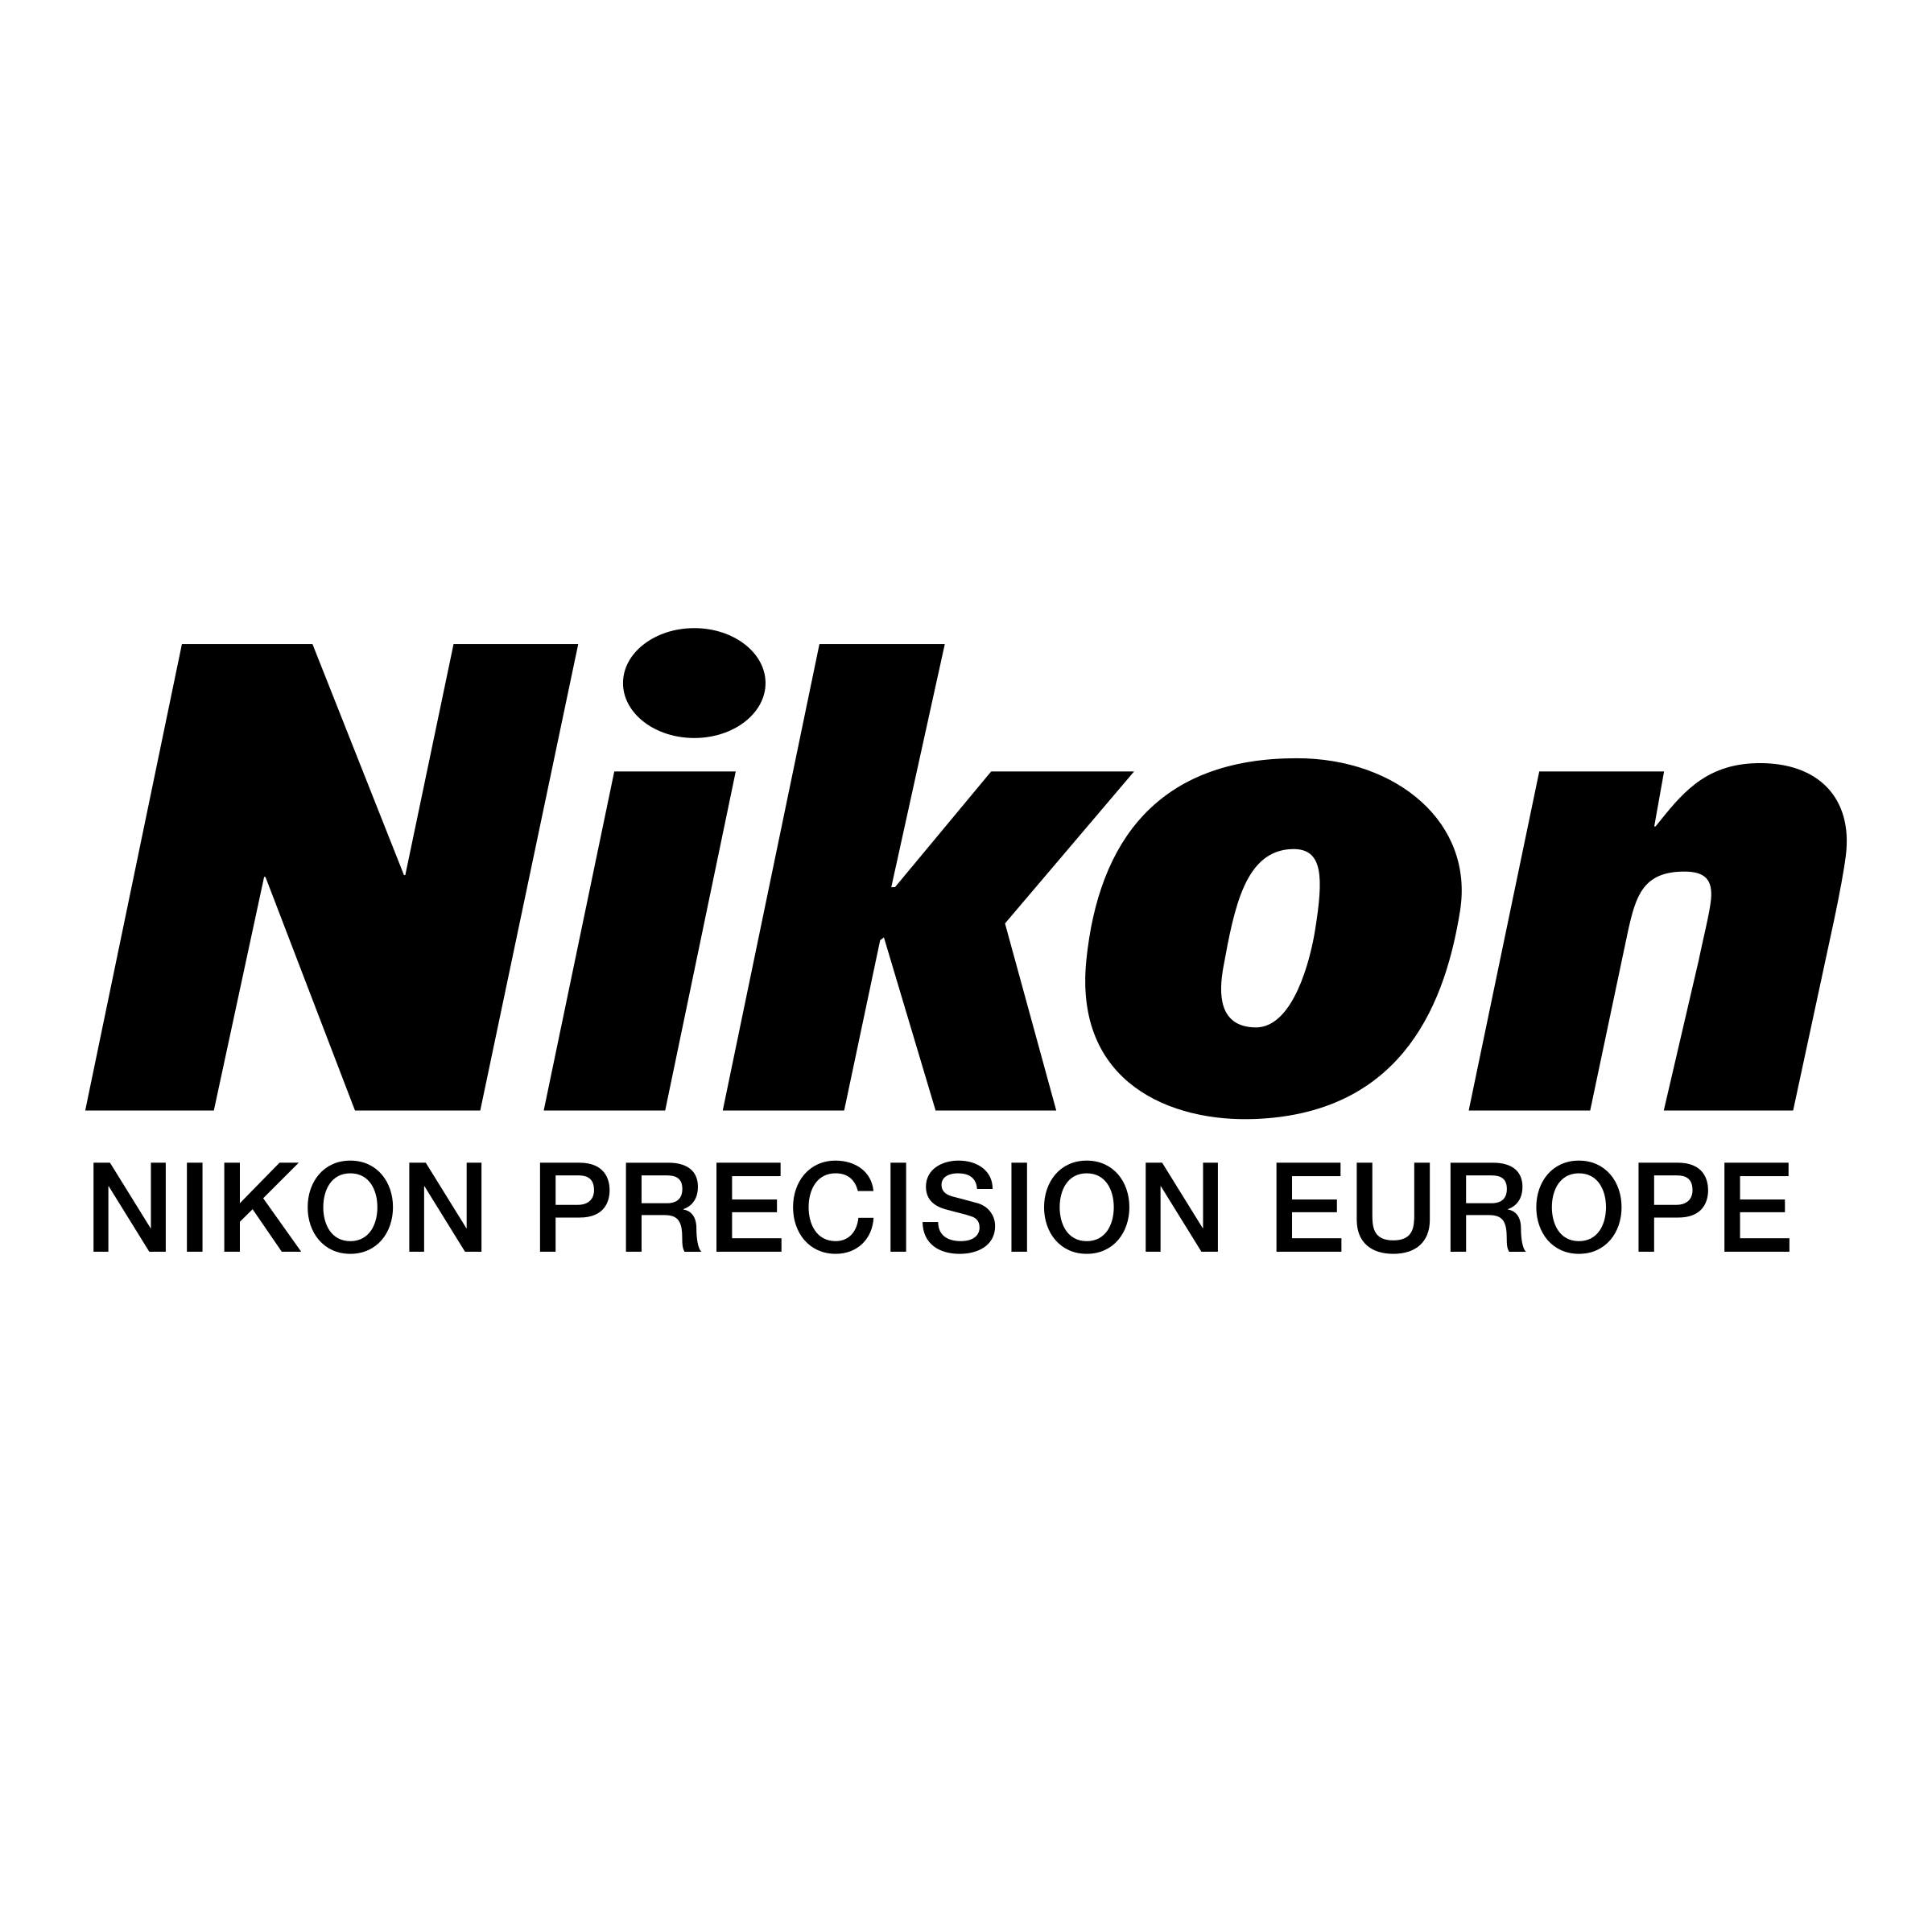 Nikon Logo - Nikon Logo PNG Transparent & SVG Vector - Freebie Supply